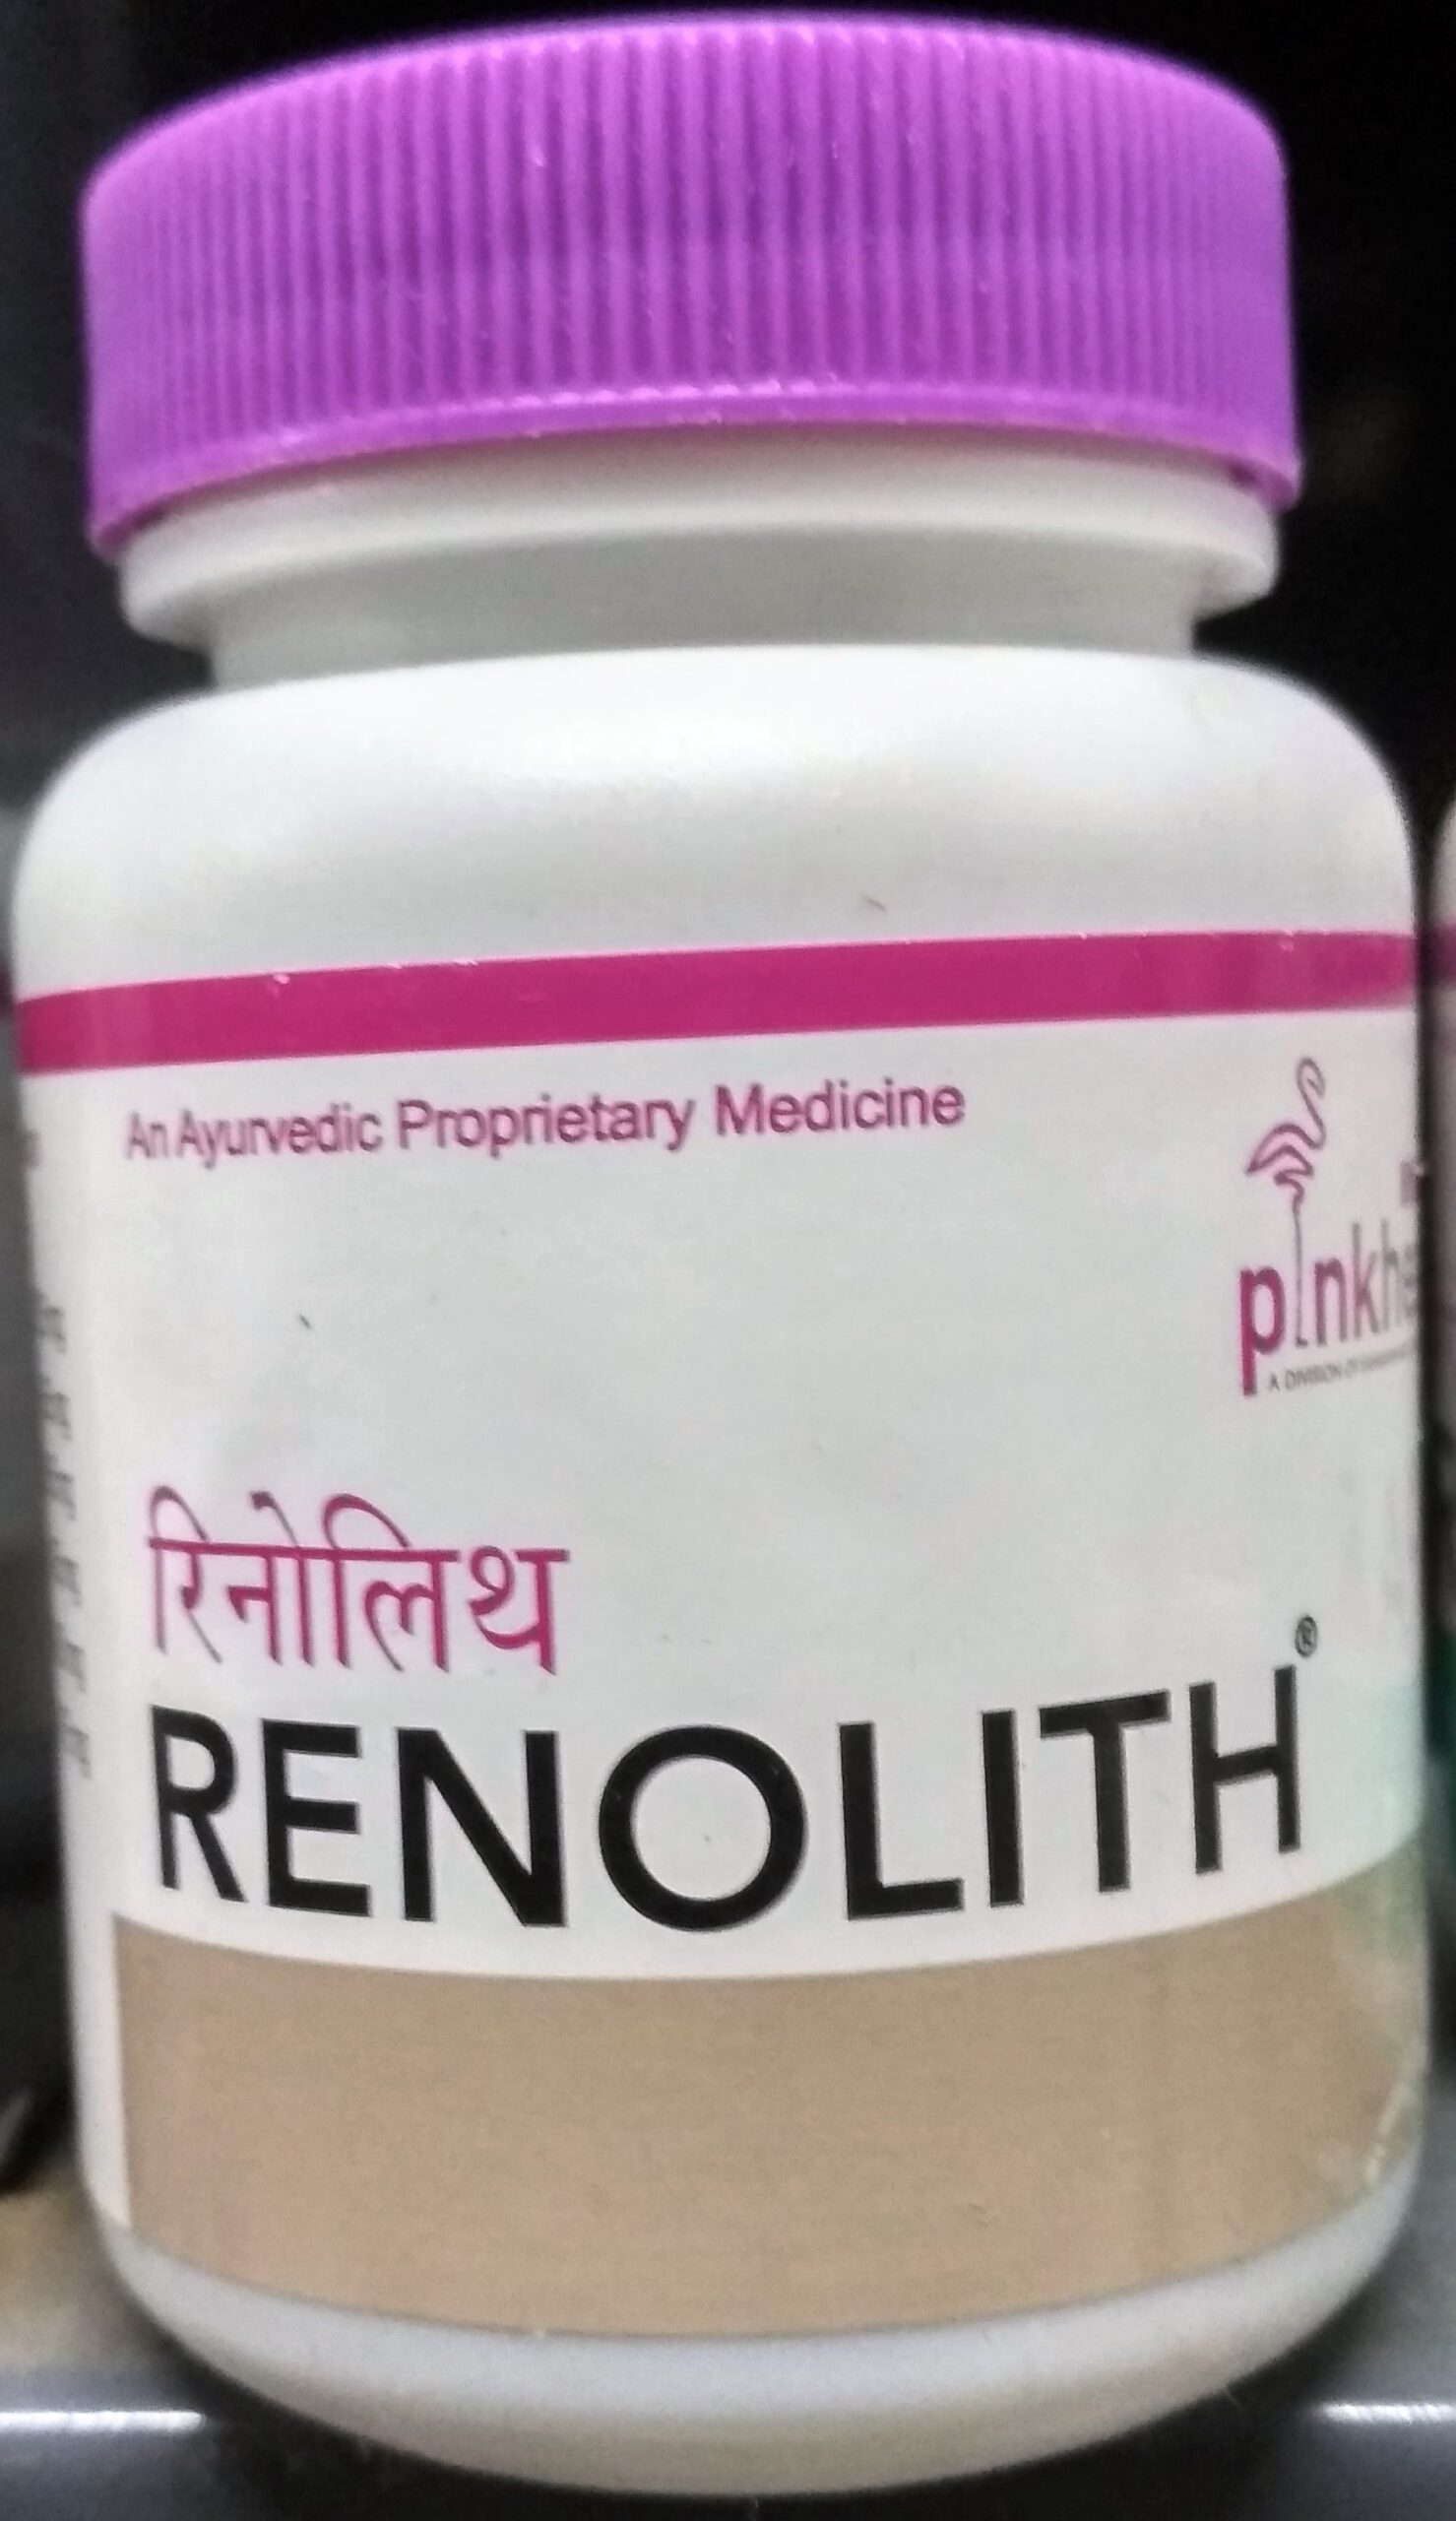 renolith 30 capsule upto 20% off pink health